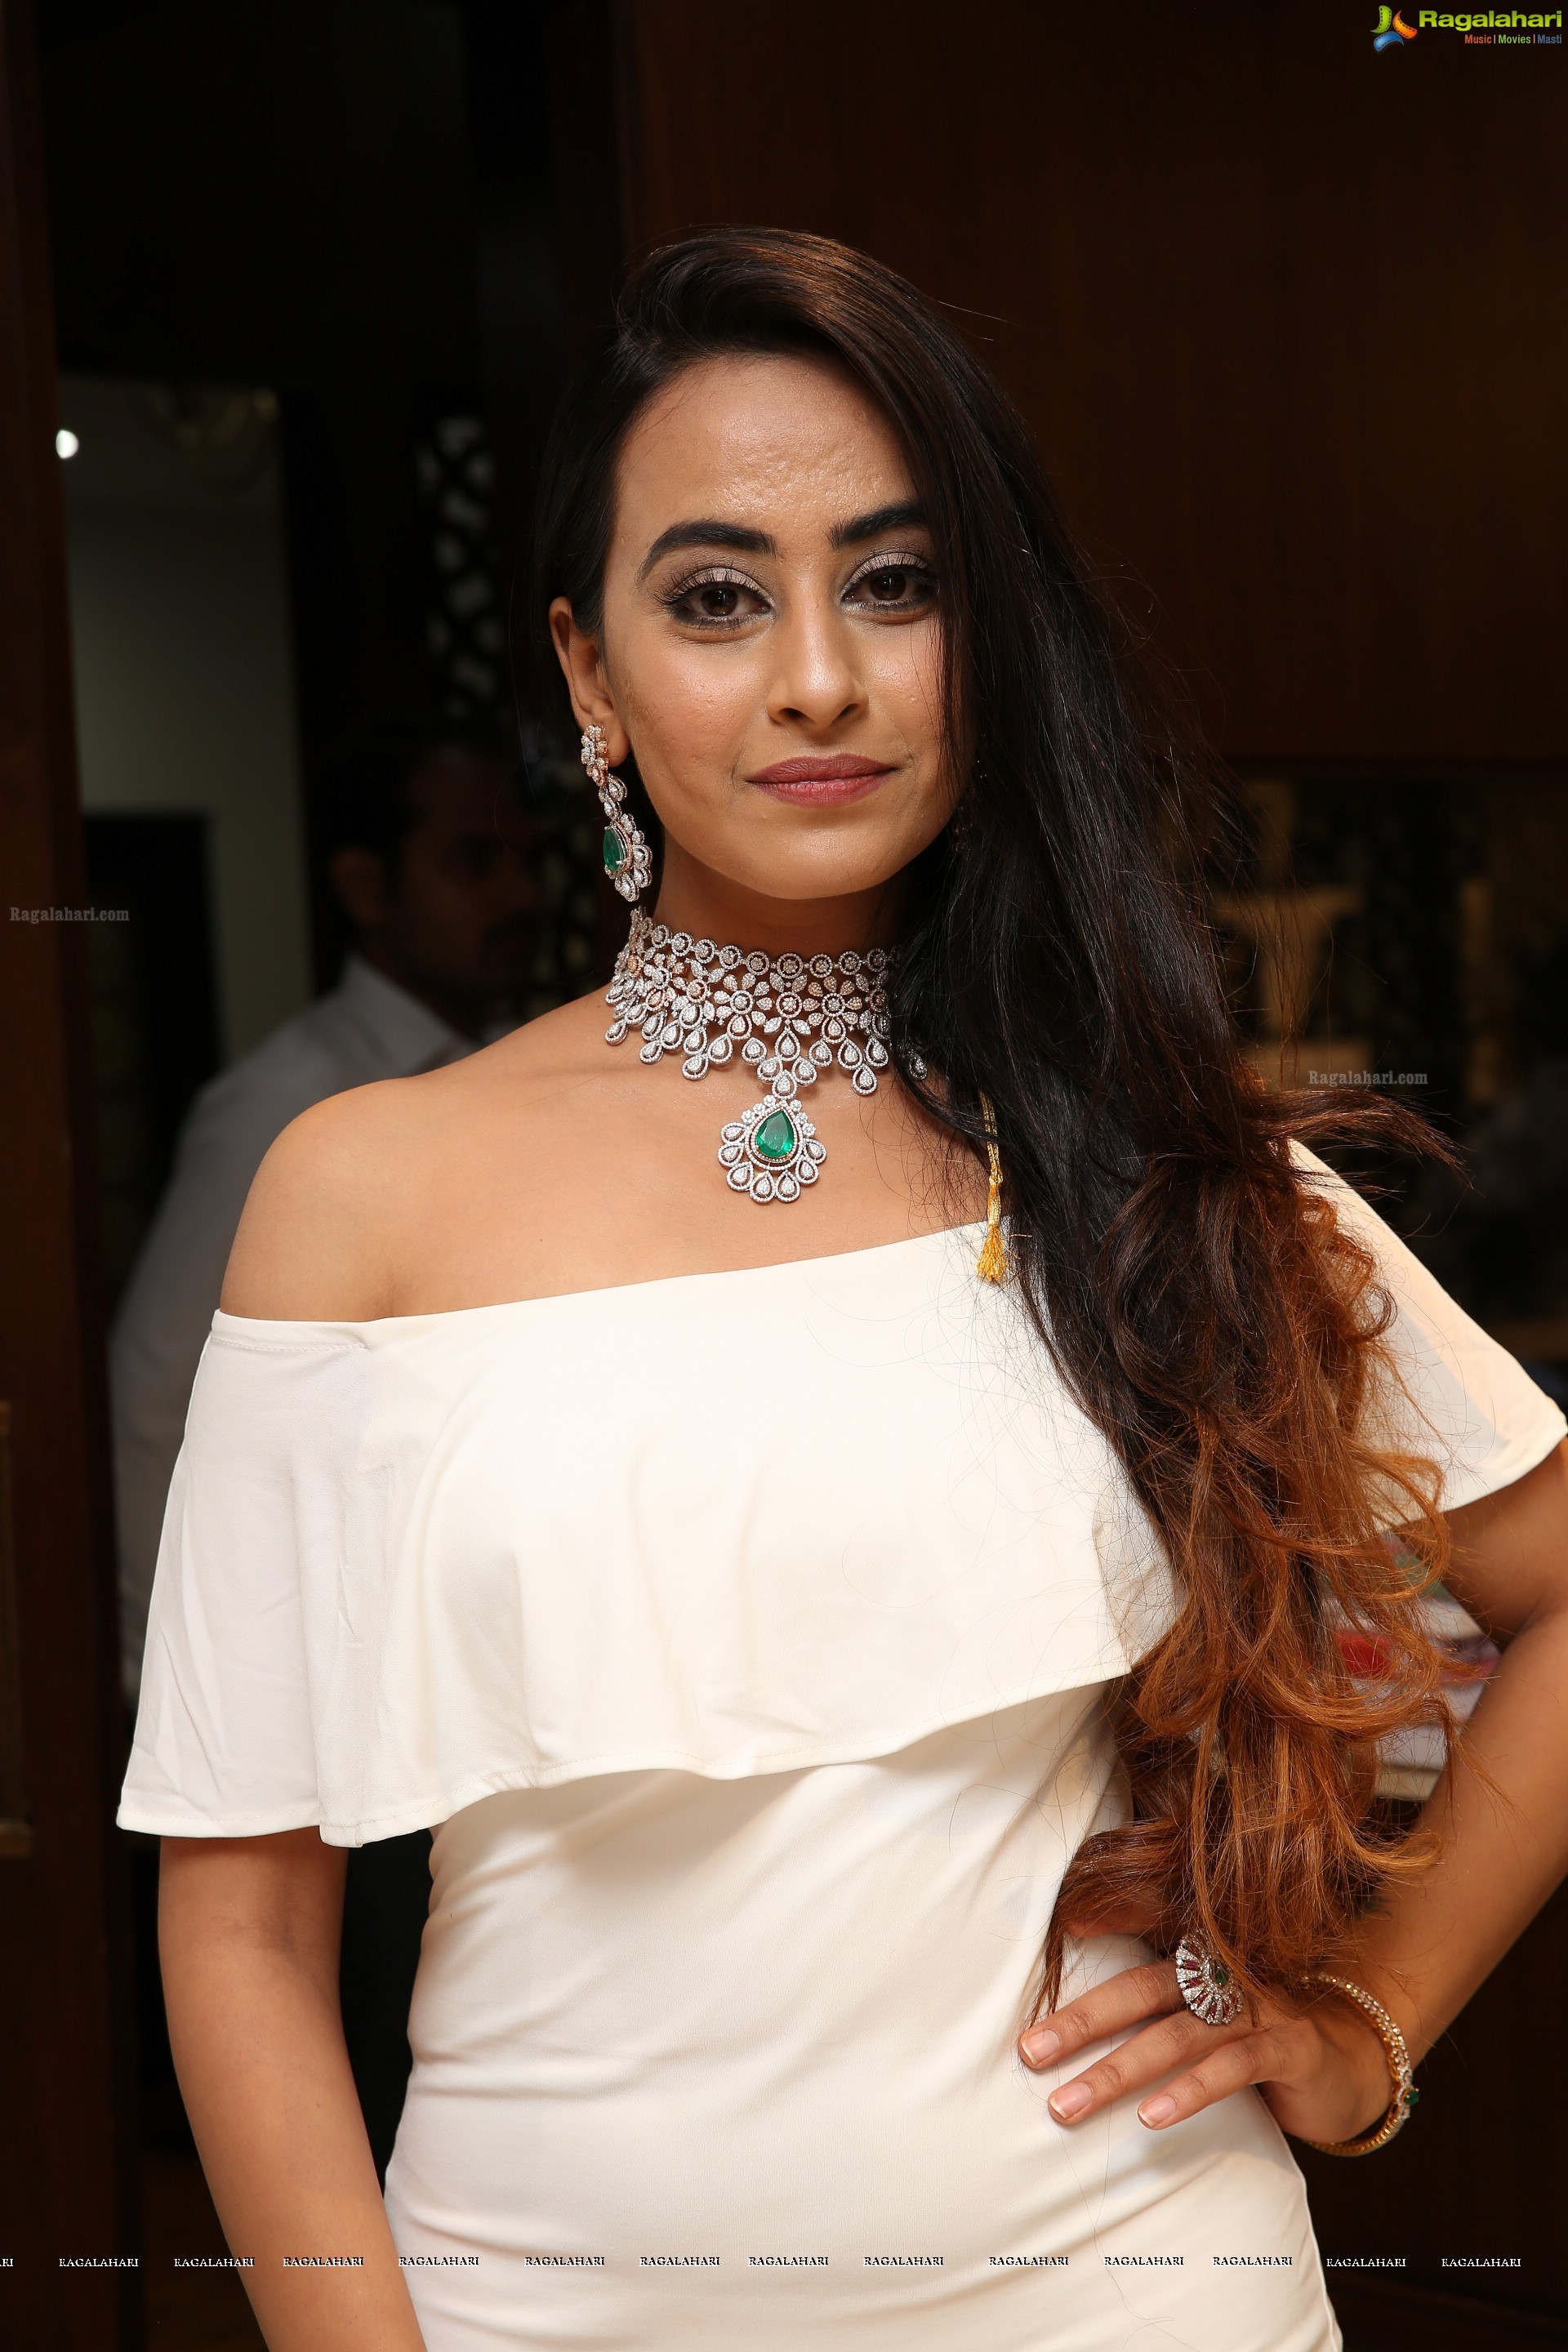 Ameeksha Amy Pawar at Manepally Jewellers Akshaya Tritiya 2018 Jewellery Showcase (High Definition)